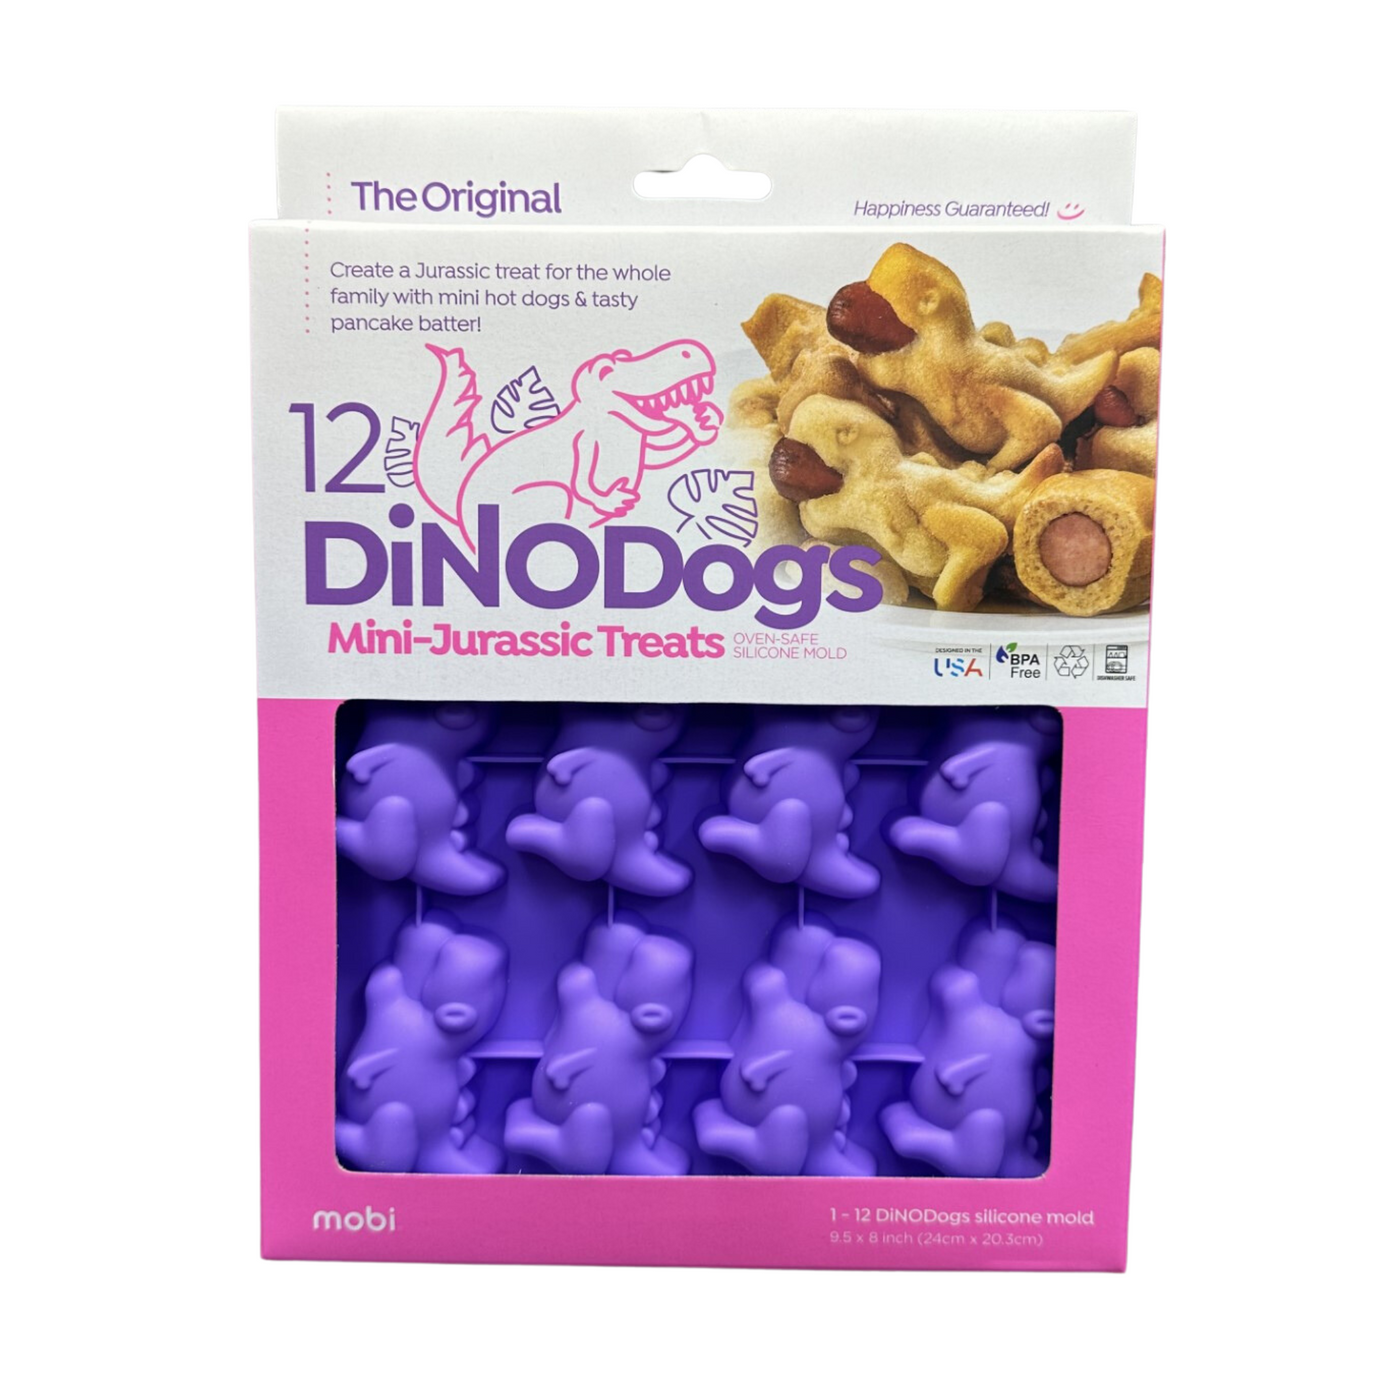 Dinodogs Mold